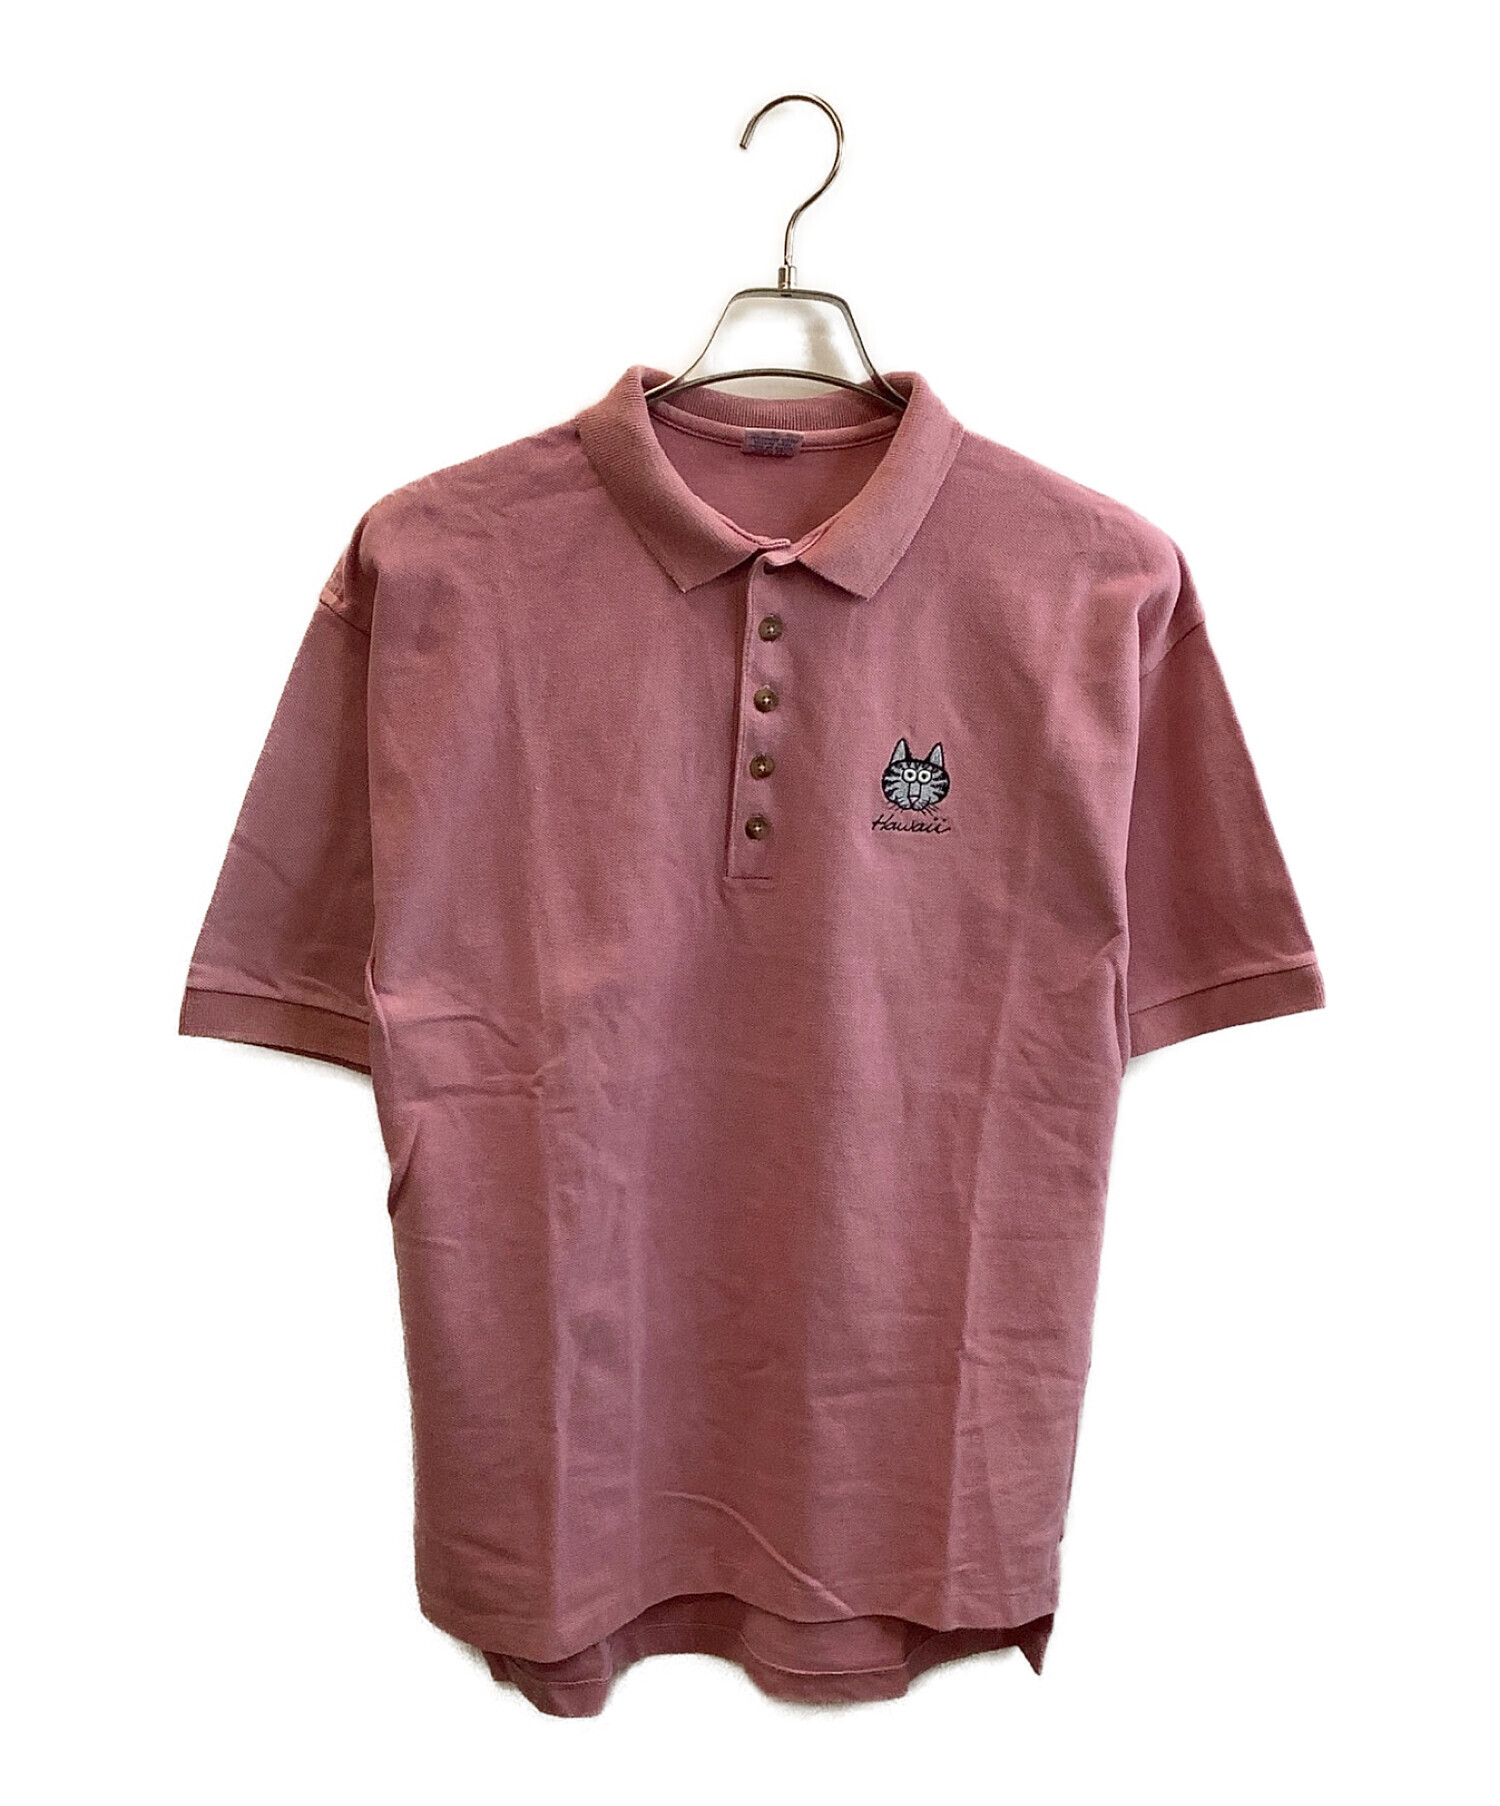 crazy shirts (クレイジーシャツ) ヴィンテージポロシャツ ピンク サイズ:S